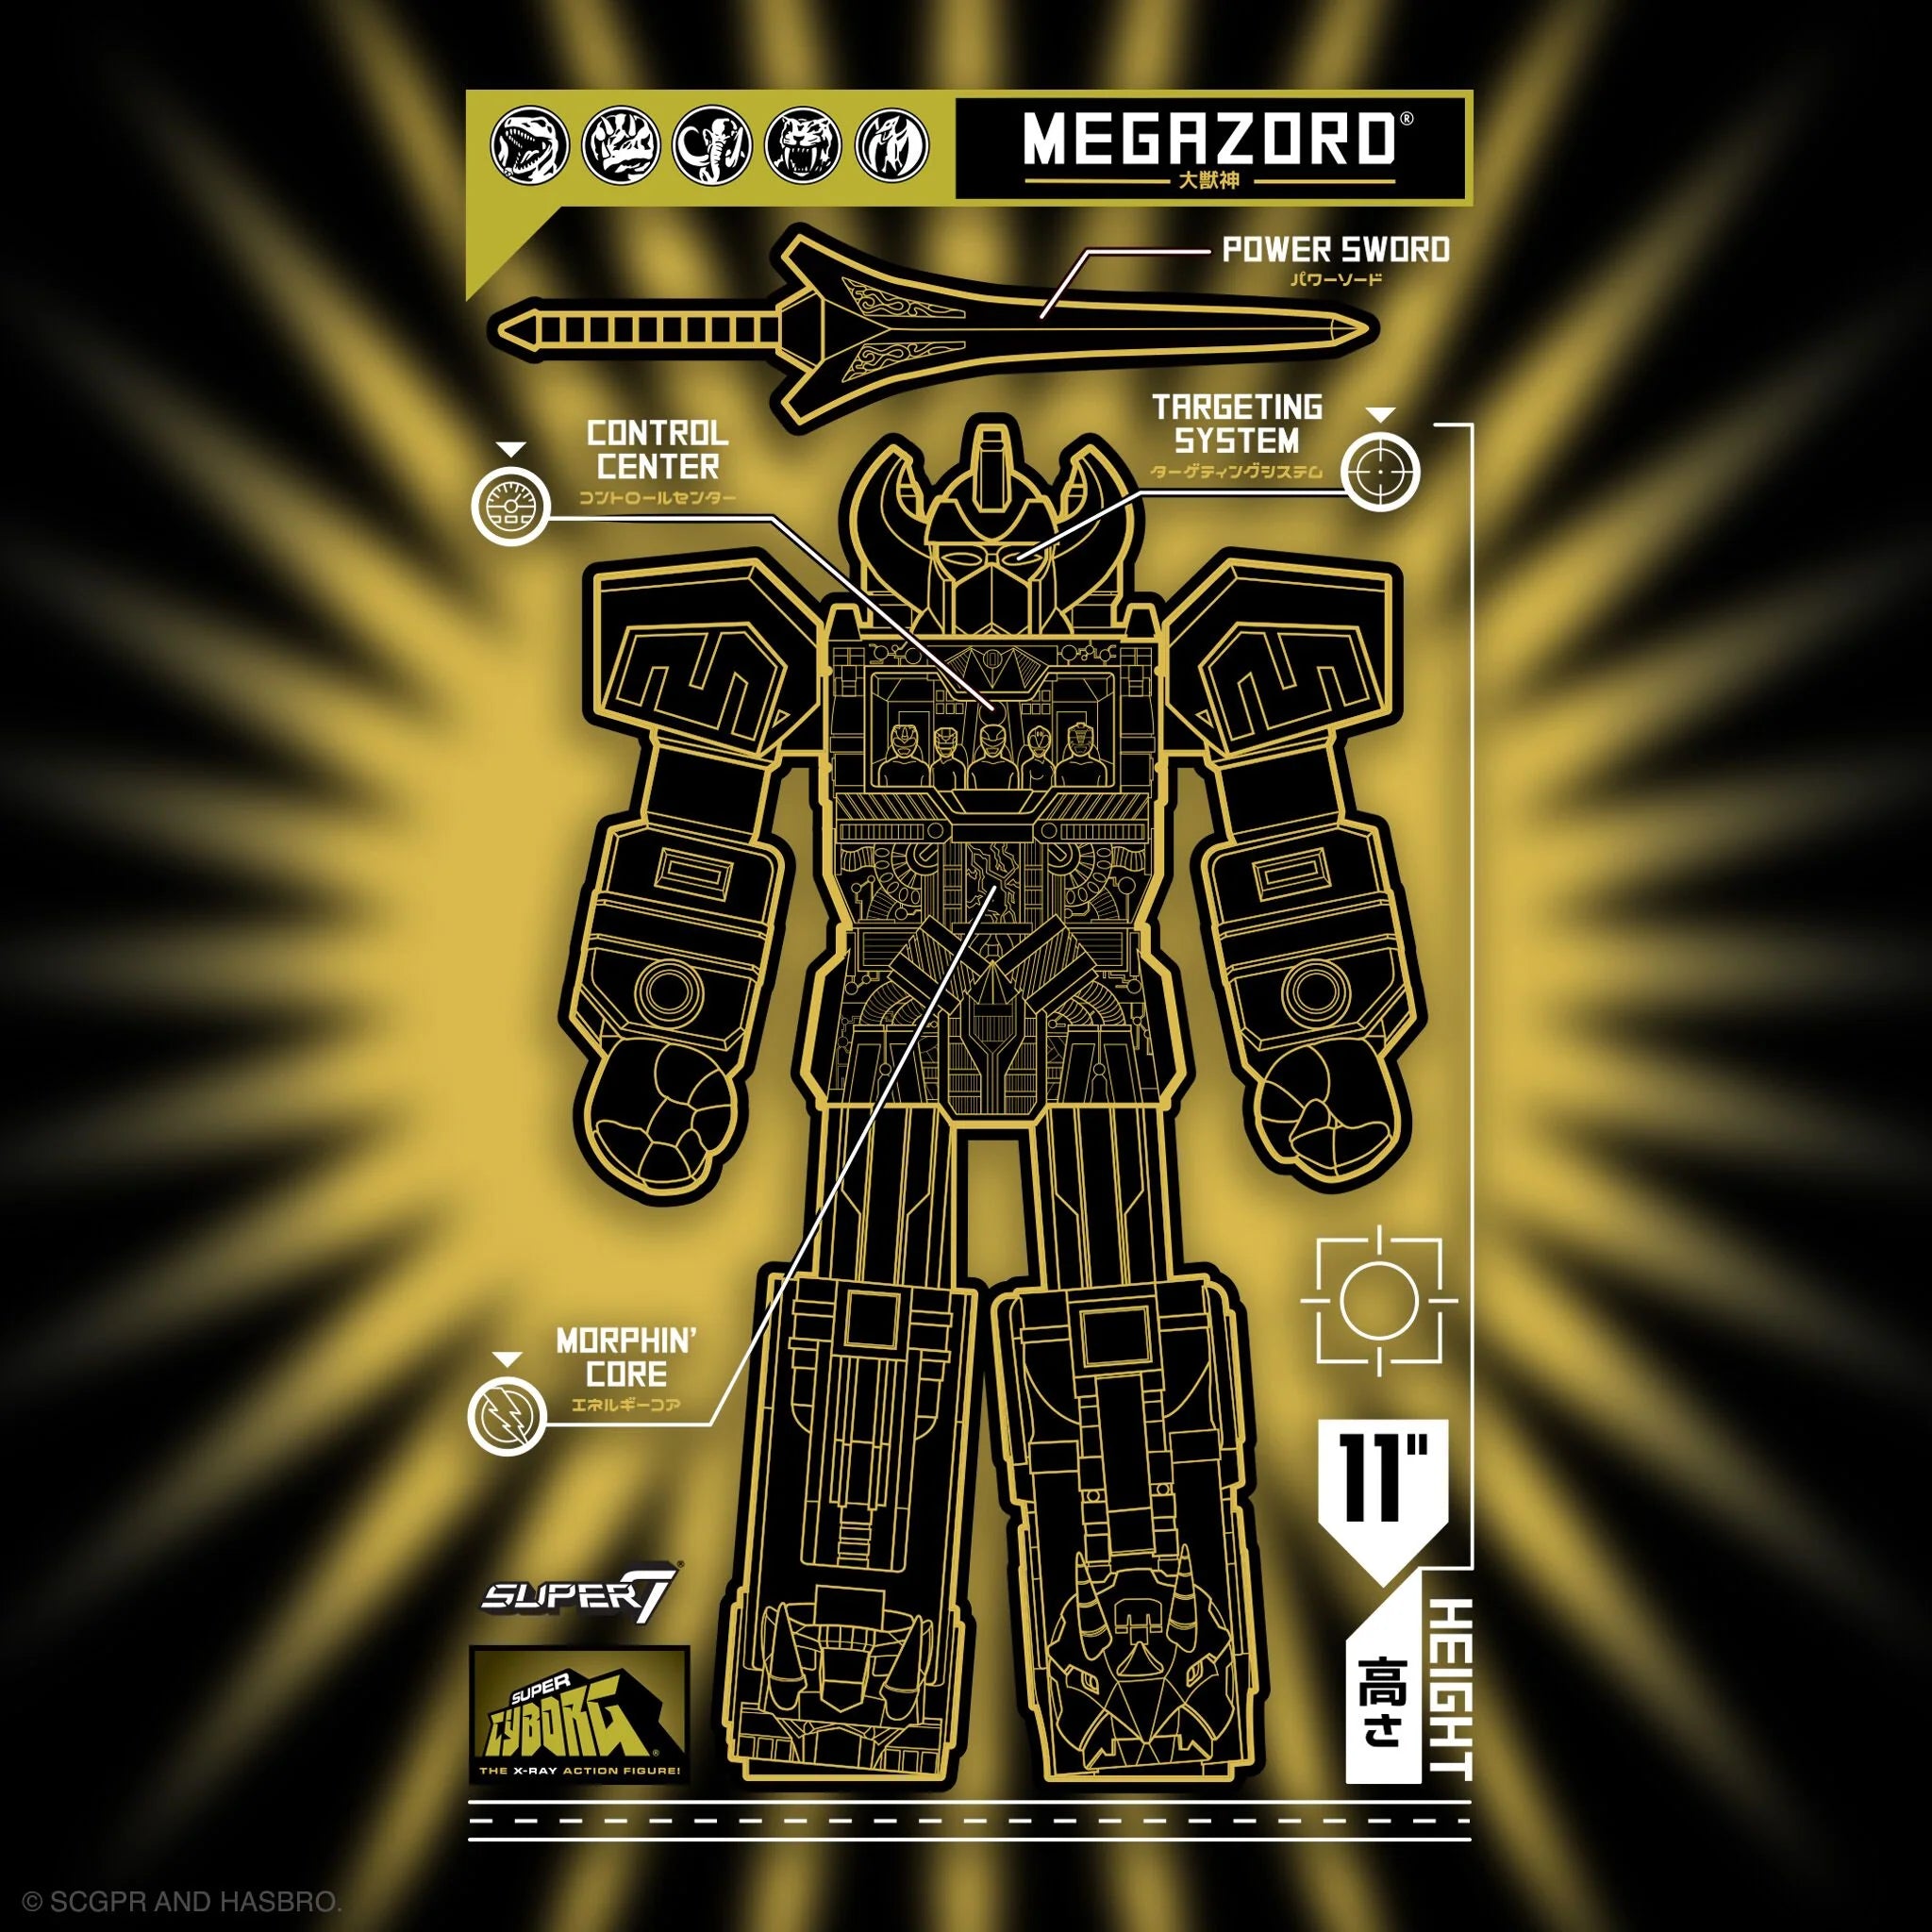 Super7 Super Cyborg: Power Rangers Mighty Morphin - Megazord Negro con Dorado